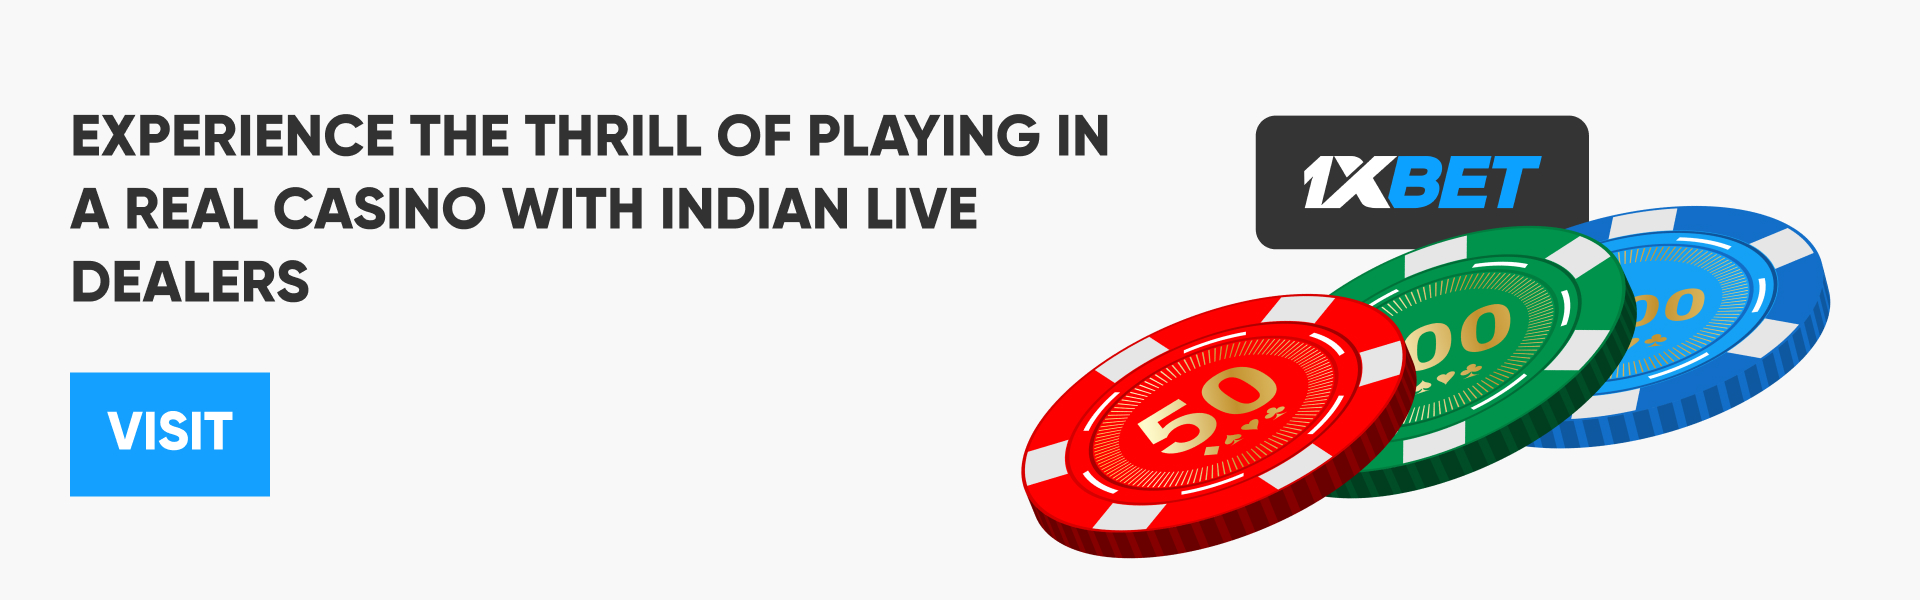 1xBet Indian live casinos